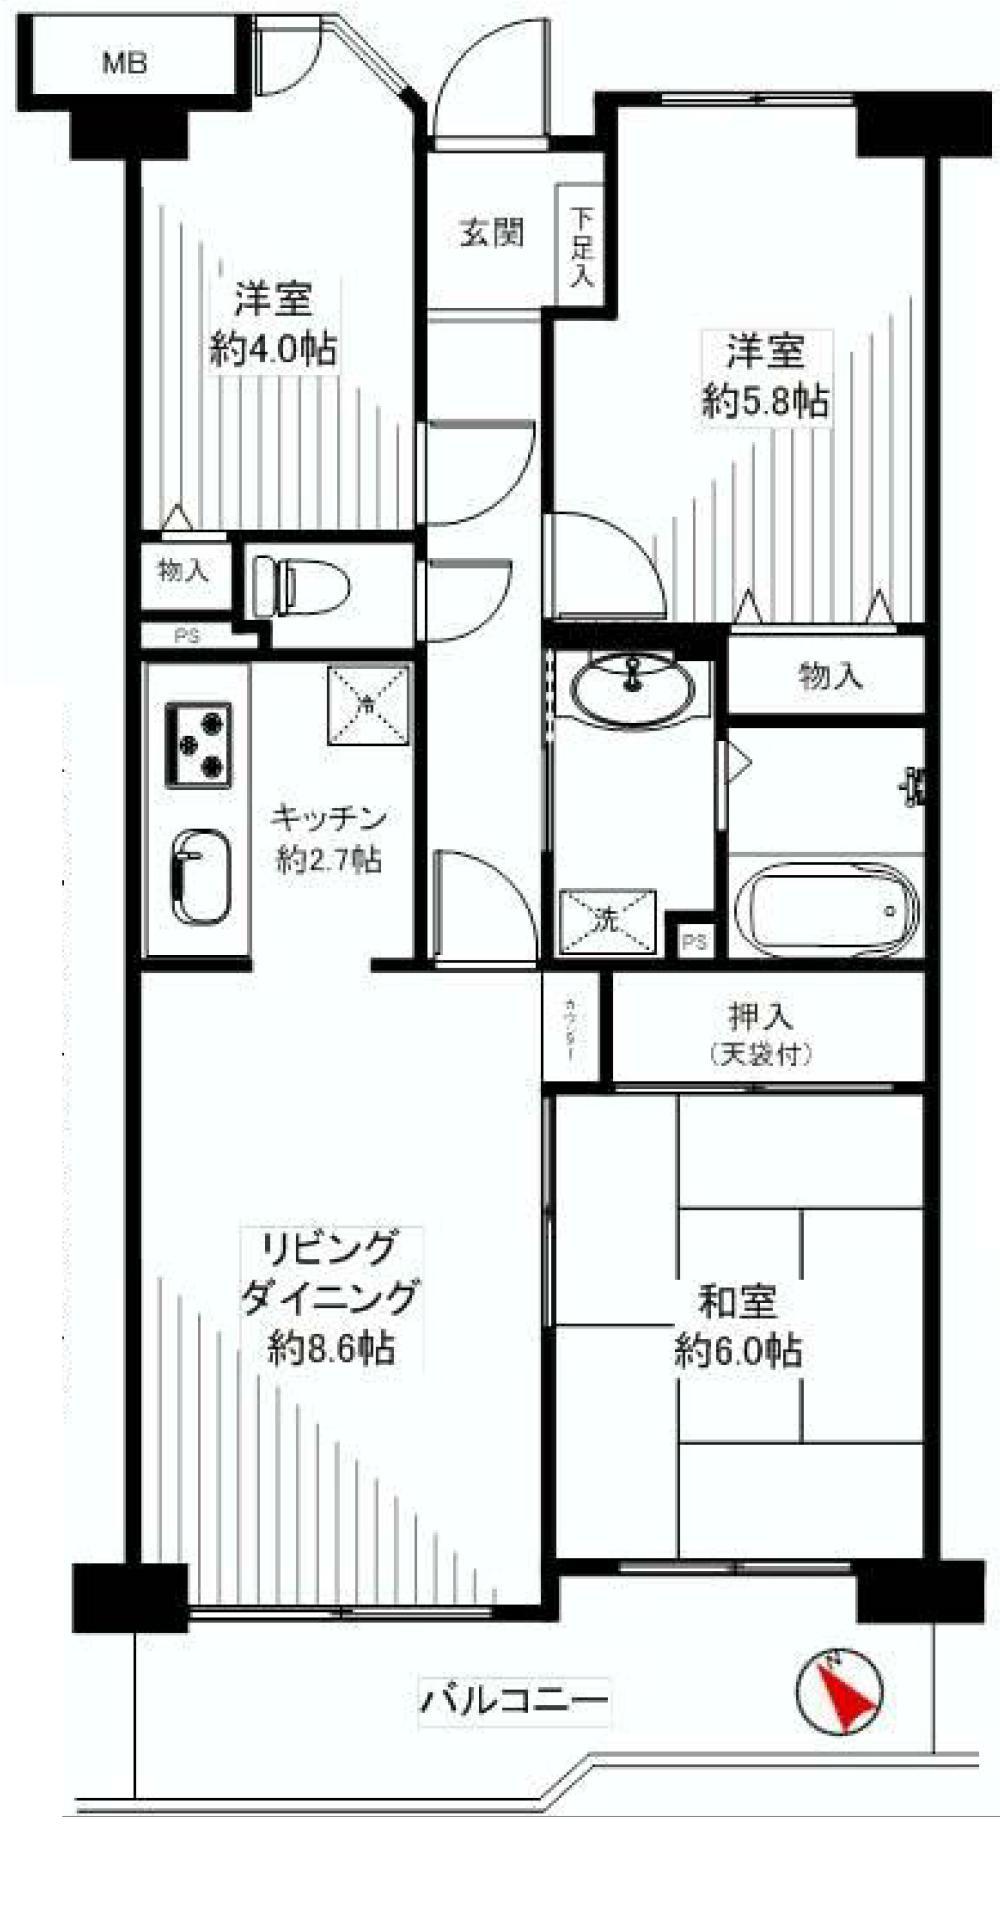 Floor plan. 3LDK, Price 15.9 million yen, Occupied area 60.47 sq m , Balcony area 8.38 sq m